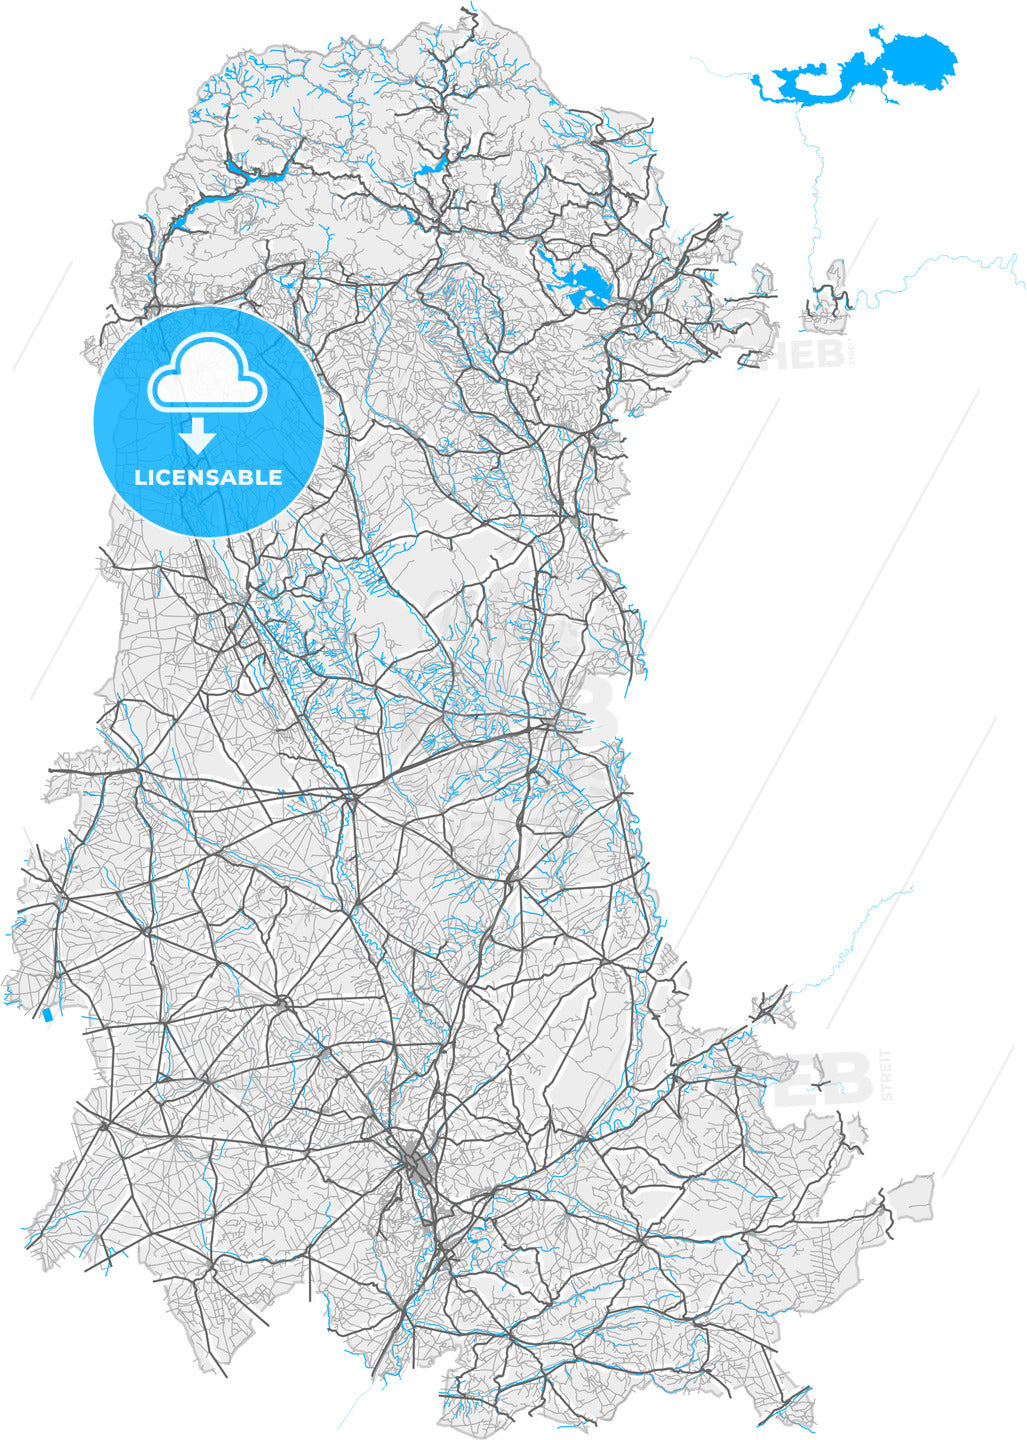 Palencia, Spain, high quality vector map